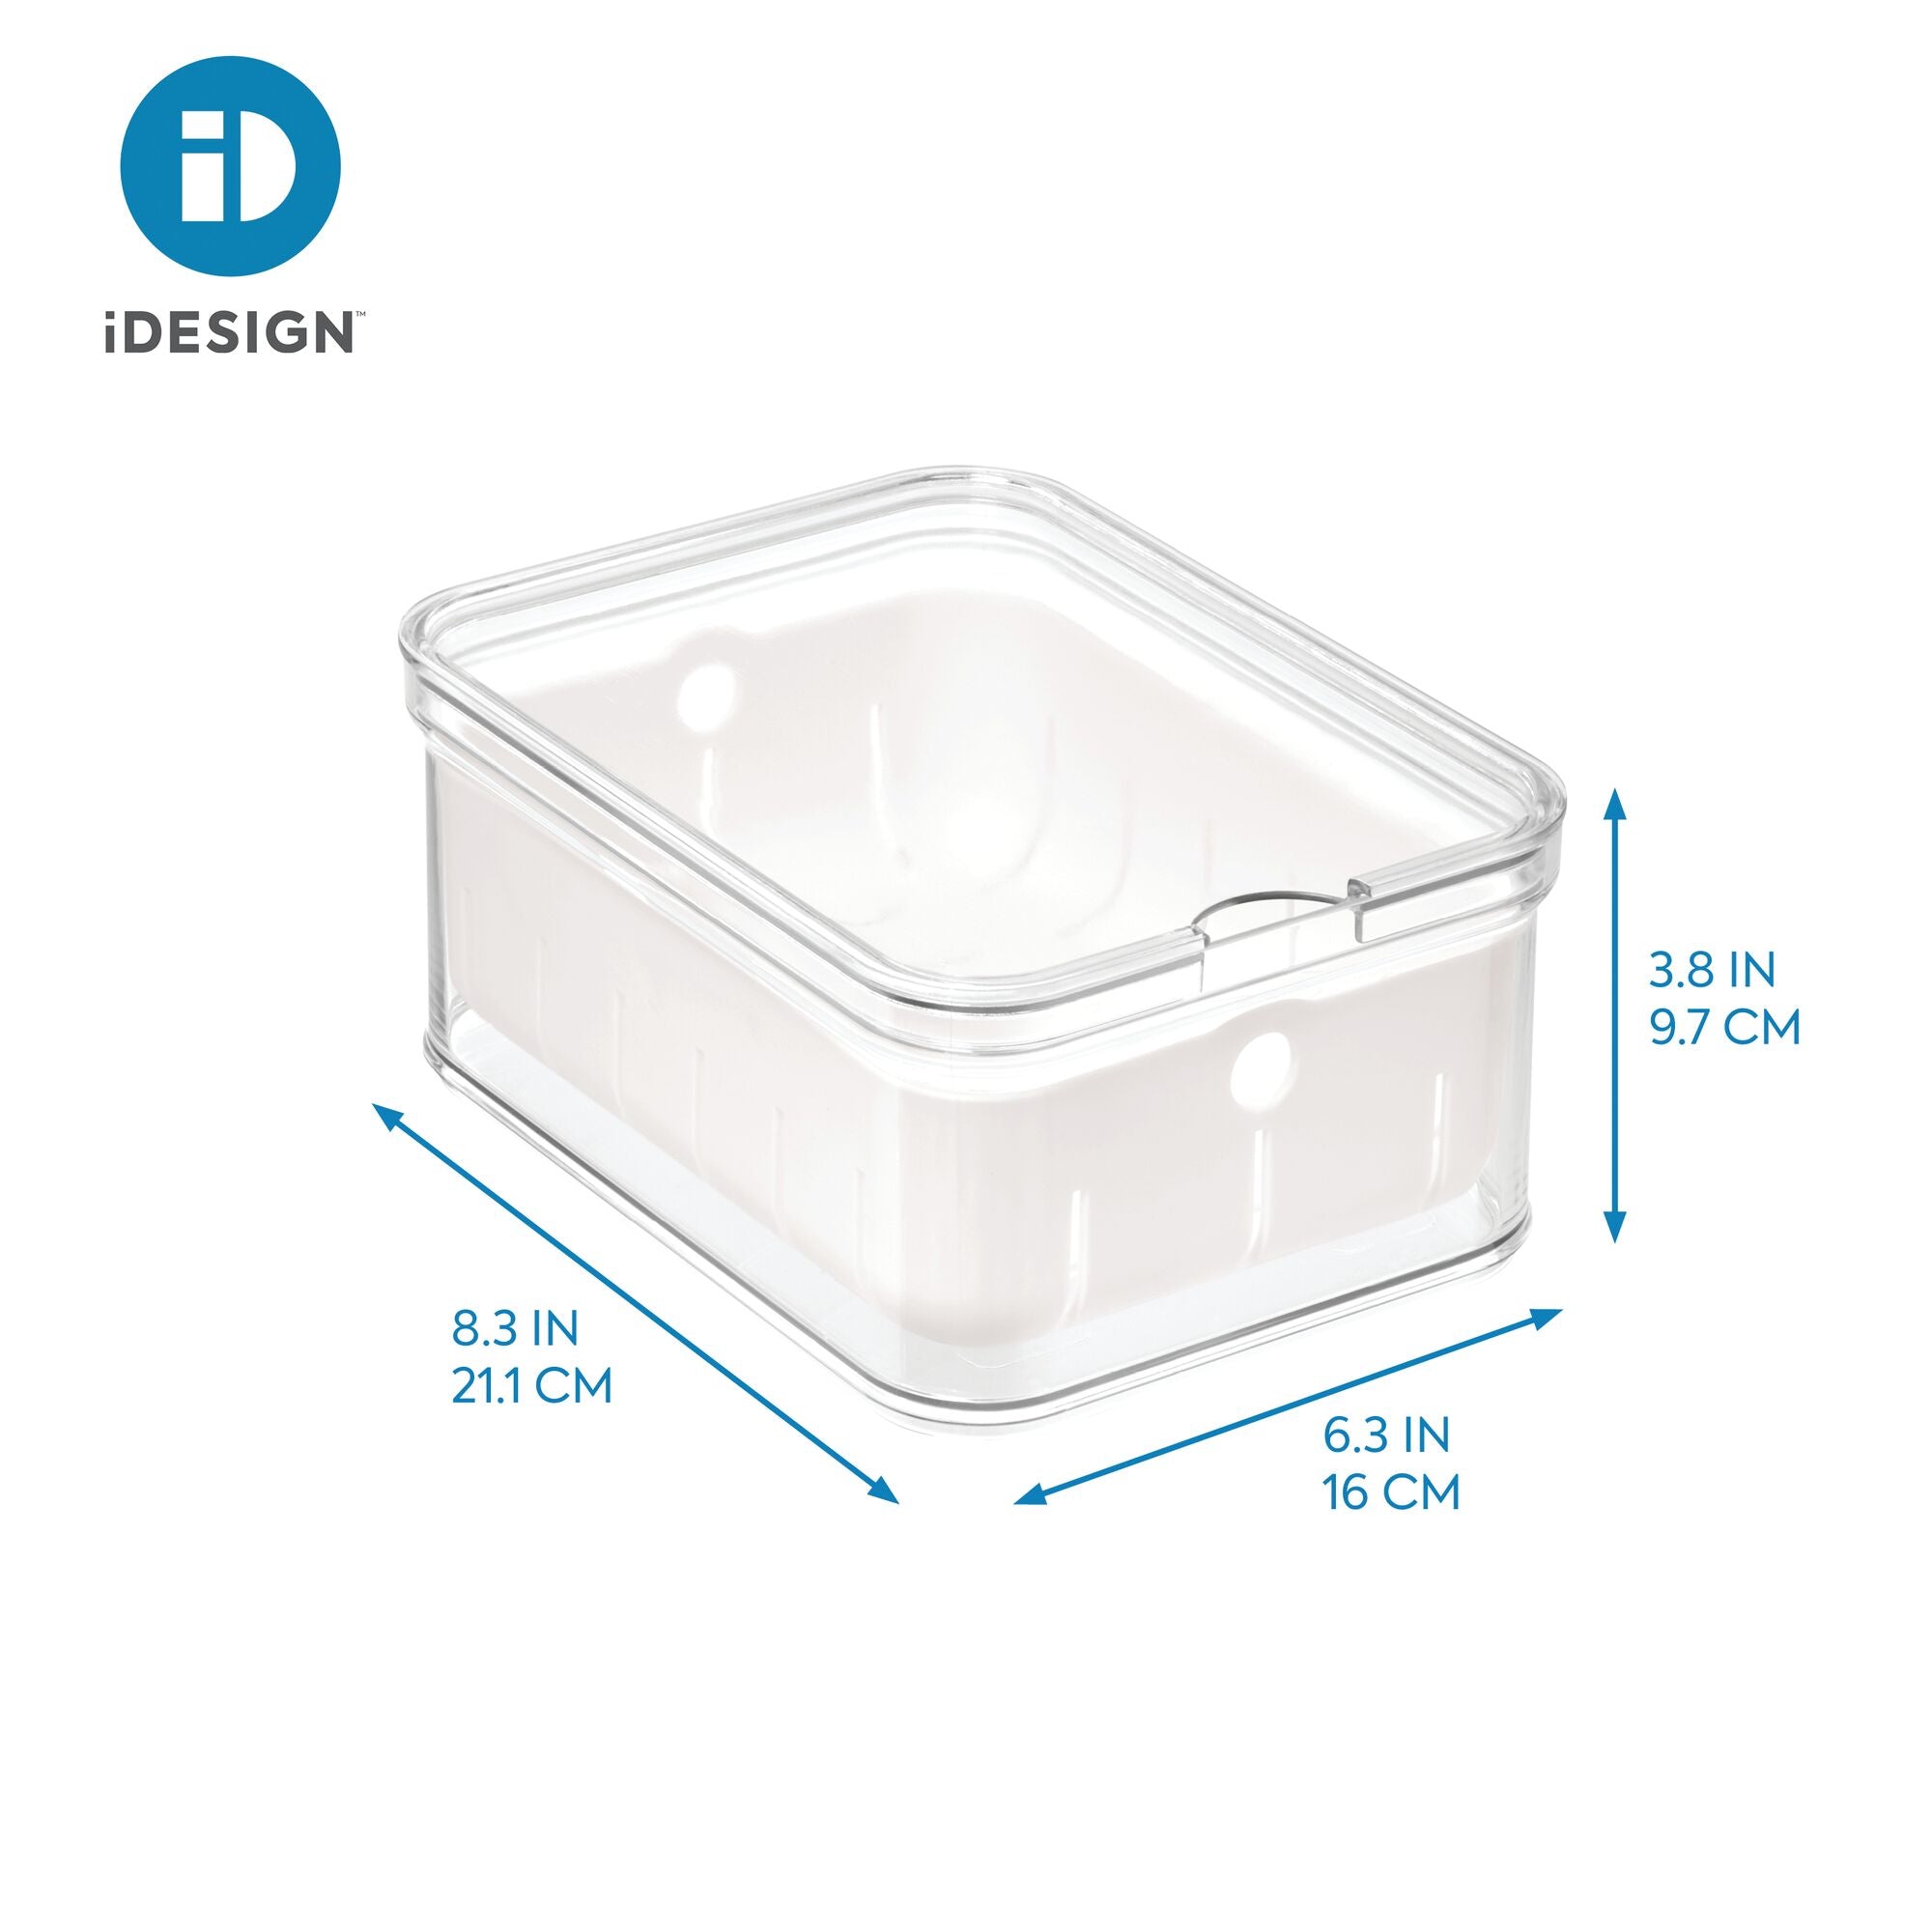 iDesign IDFRESH BPA-Free Recycled Plastic Produce Storage Bin, Small